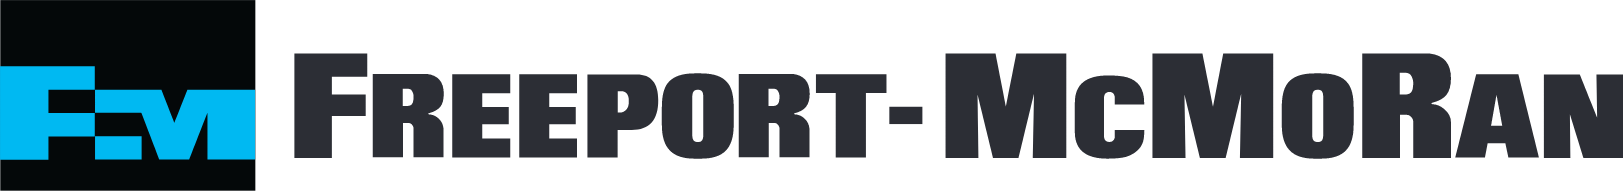 Freeport-McMoRan logo large (transparent PNG)